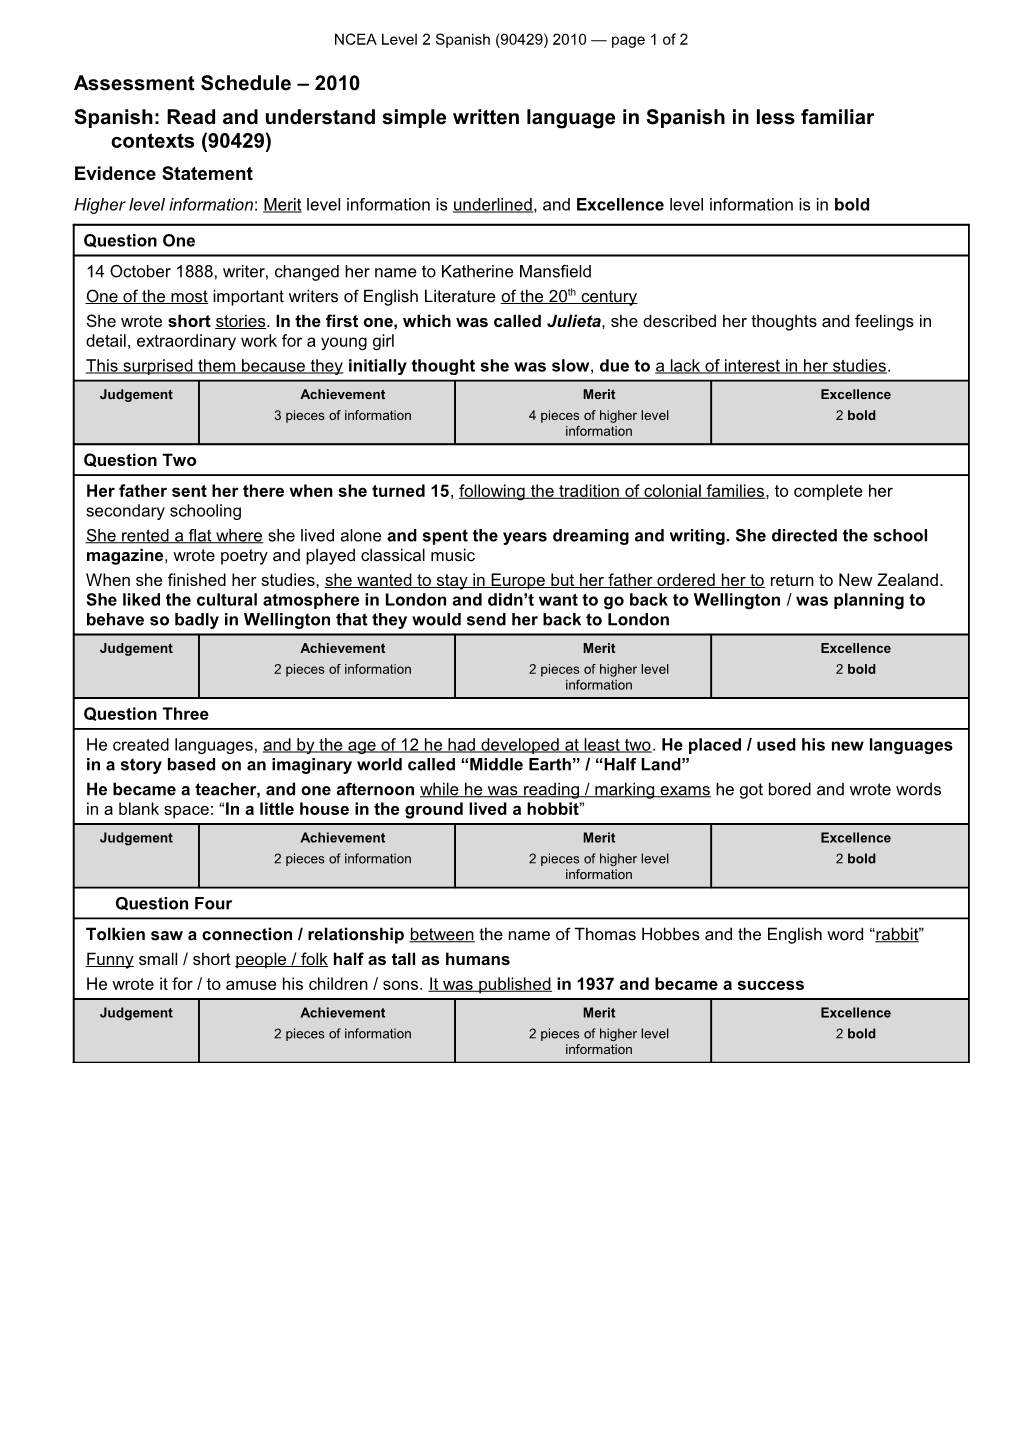 Level 2 Spanish (90429) 2010 Assessment Schedule